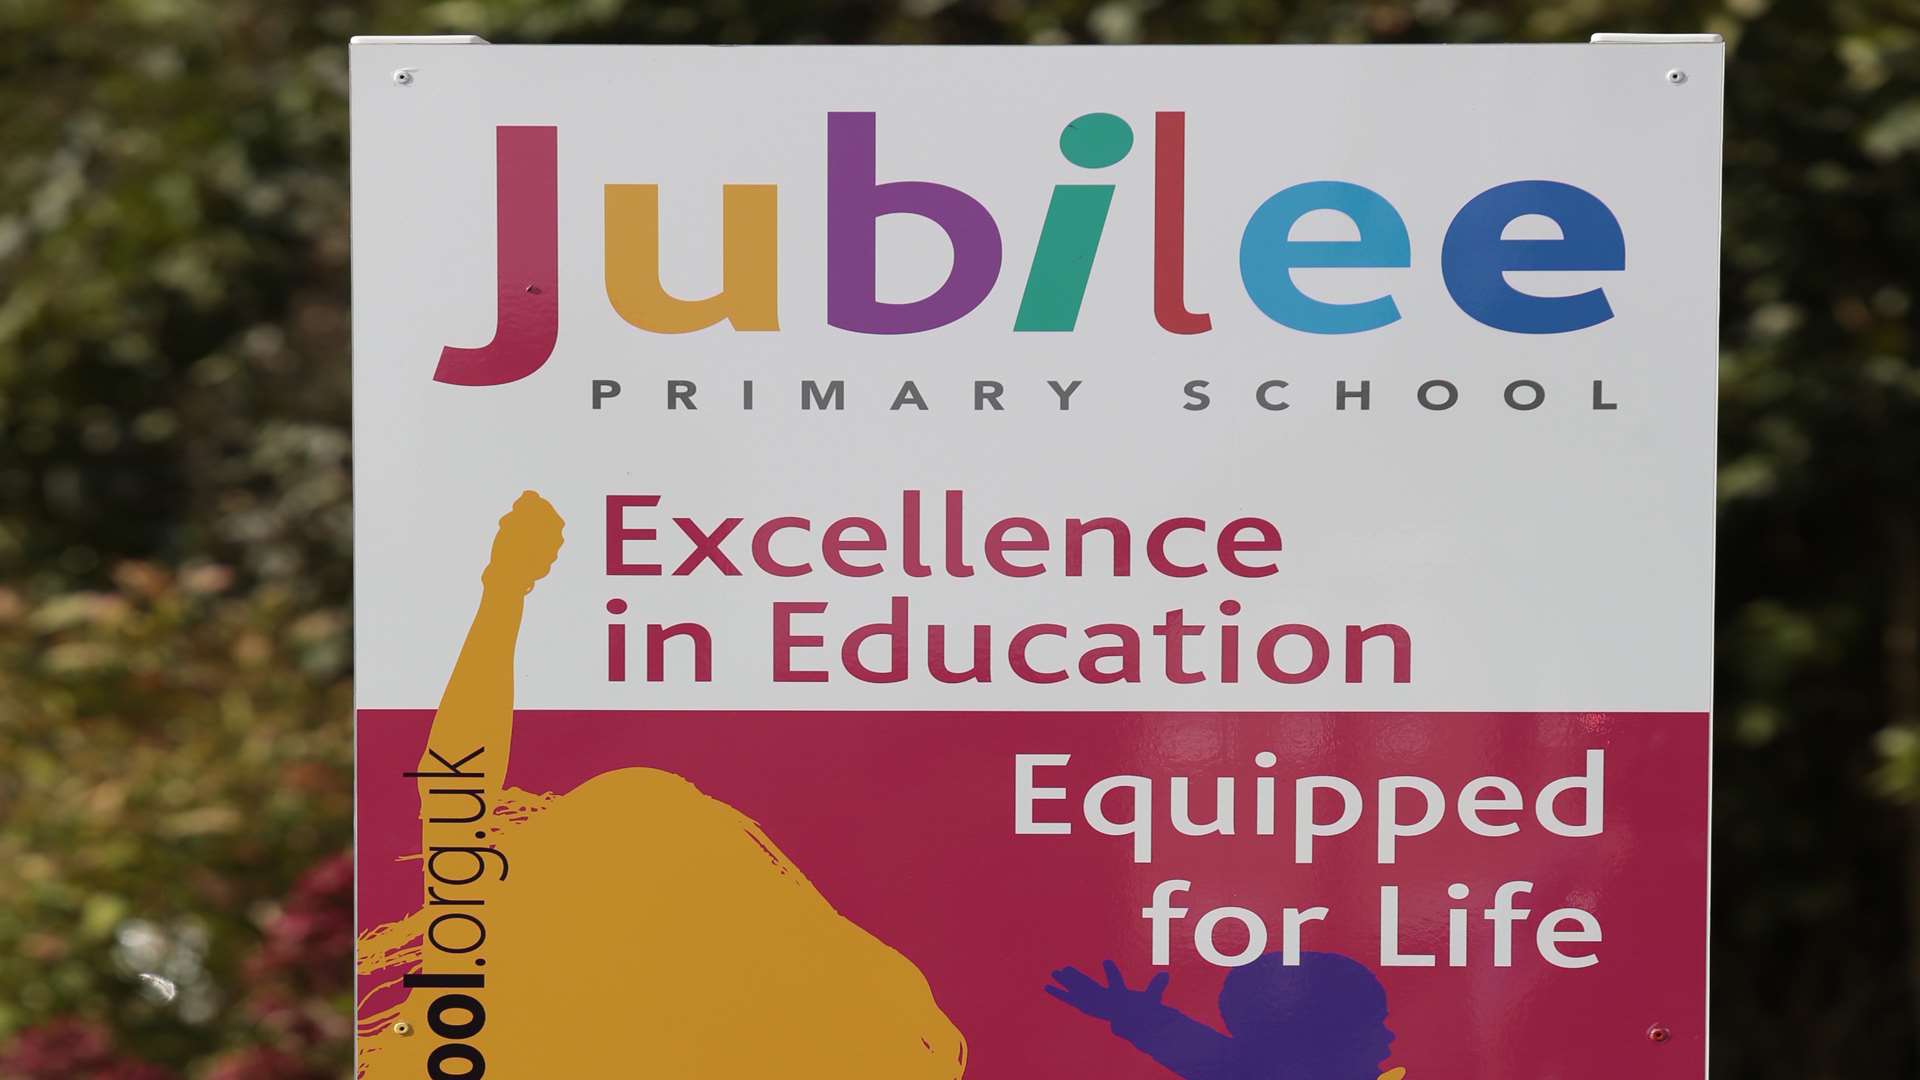 Jubilee Primary School opened in September 2014